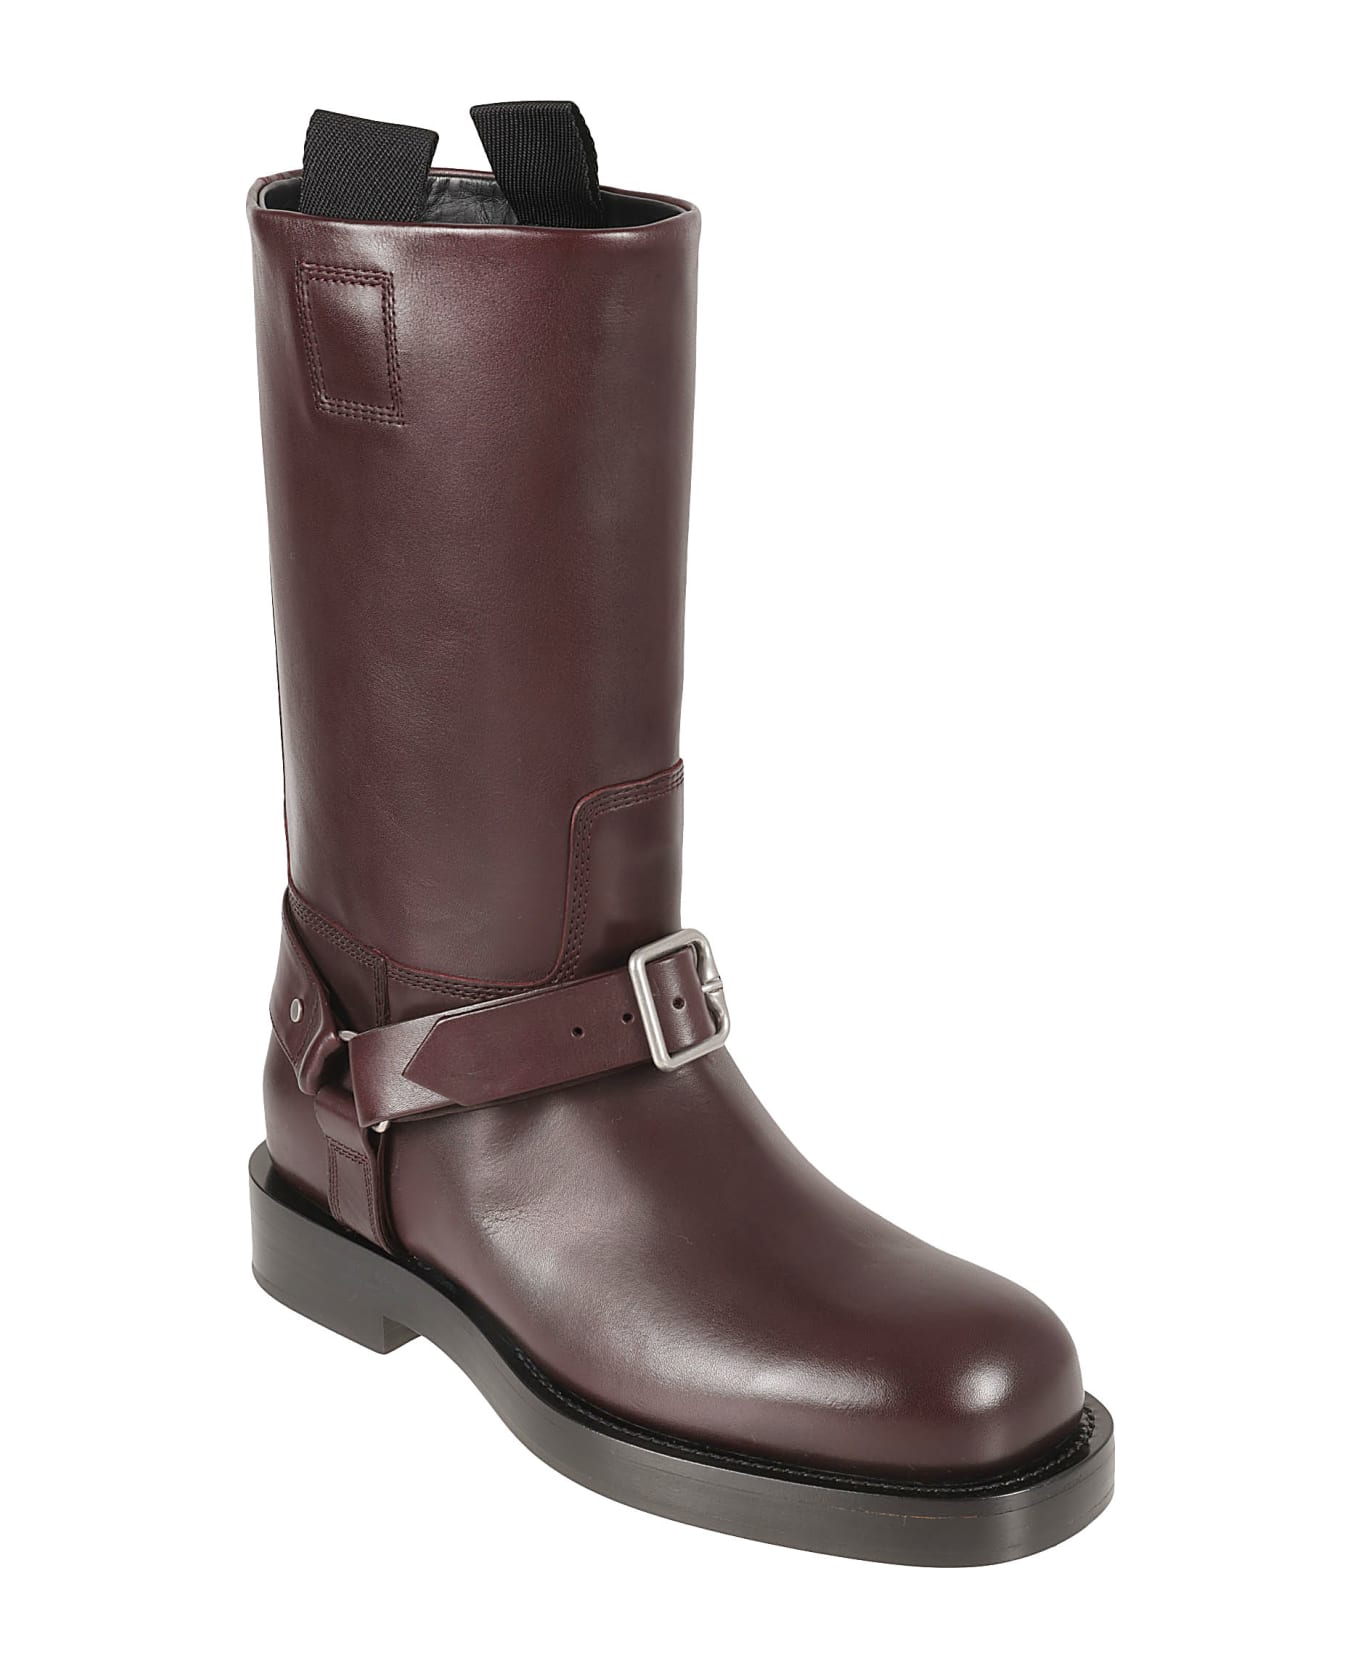 Burberry Saddle Boots - Aubergine ブーツ